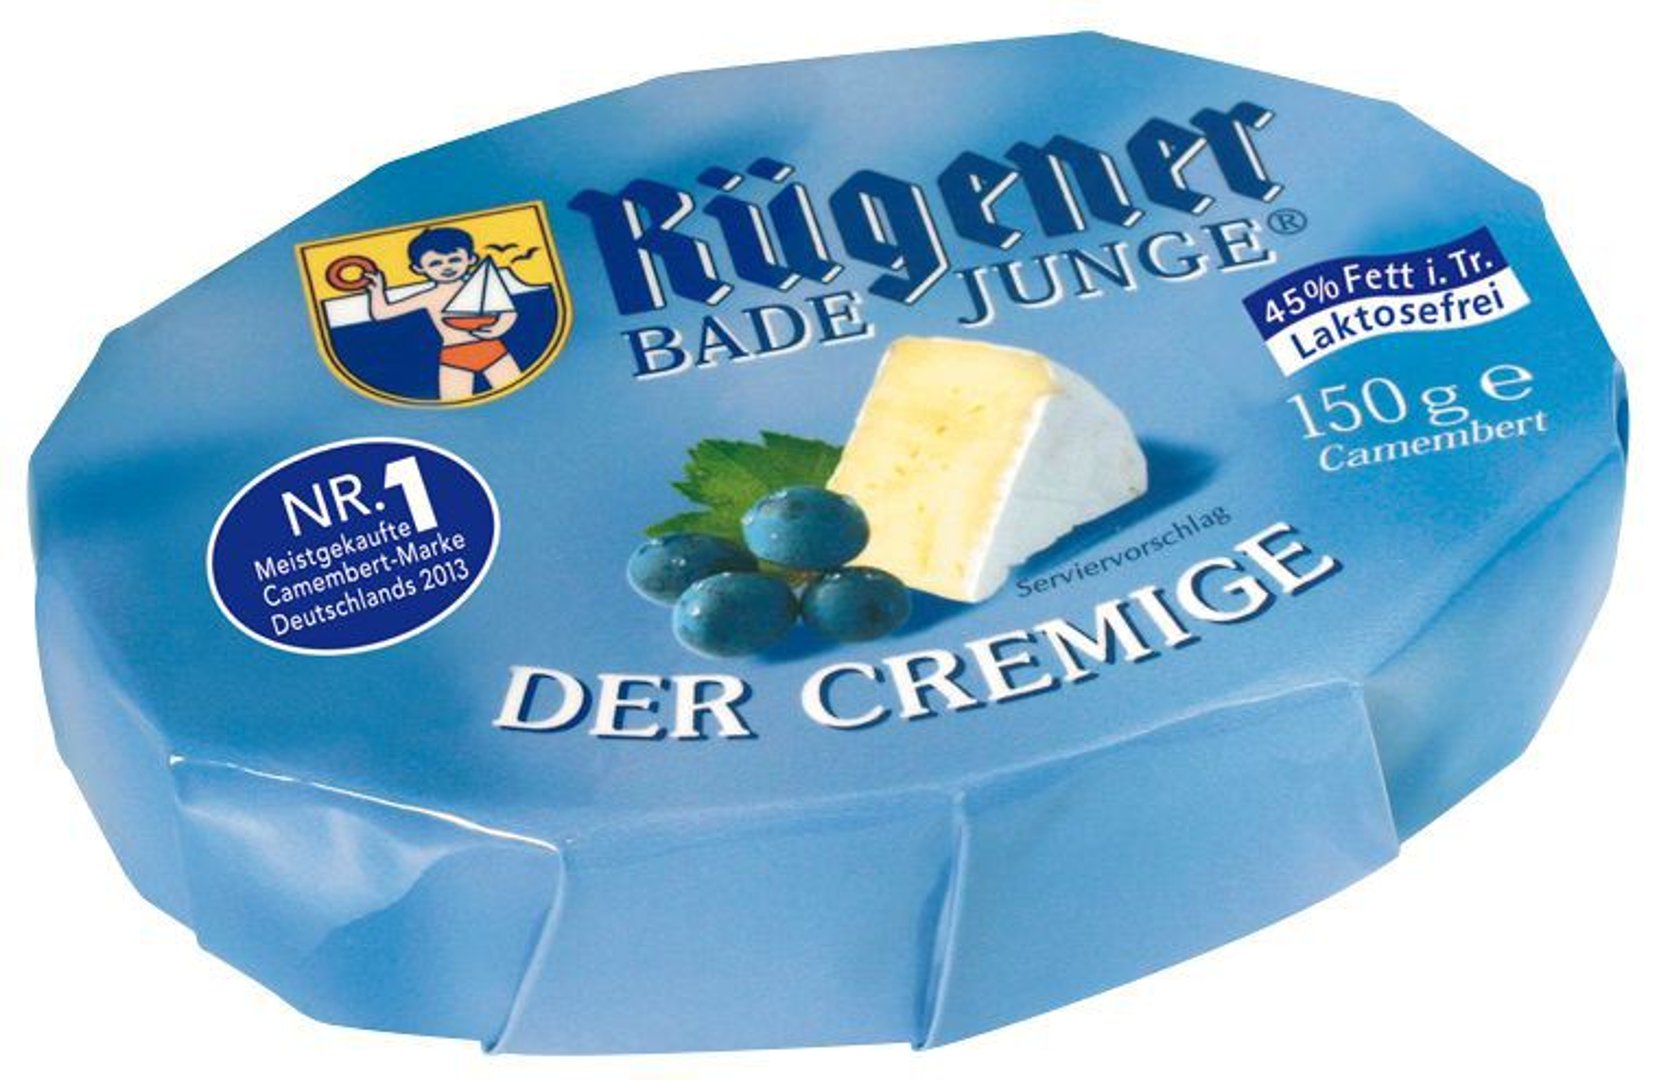 Rügener Badejunge - Deutscher Camembert Standard 45 % Fett 8 x 150 g